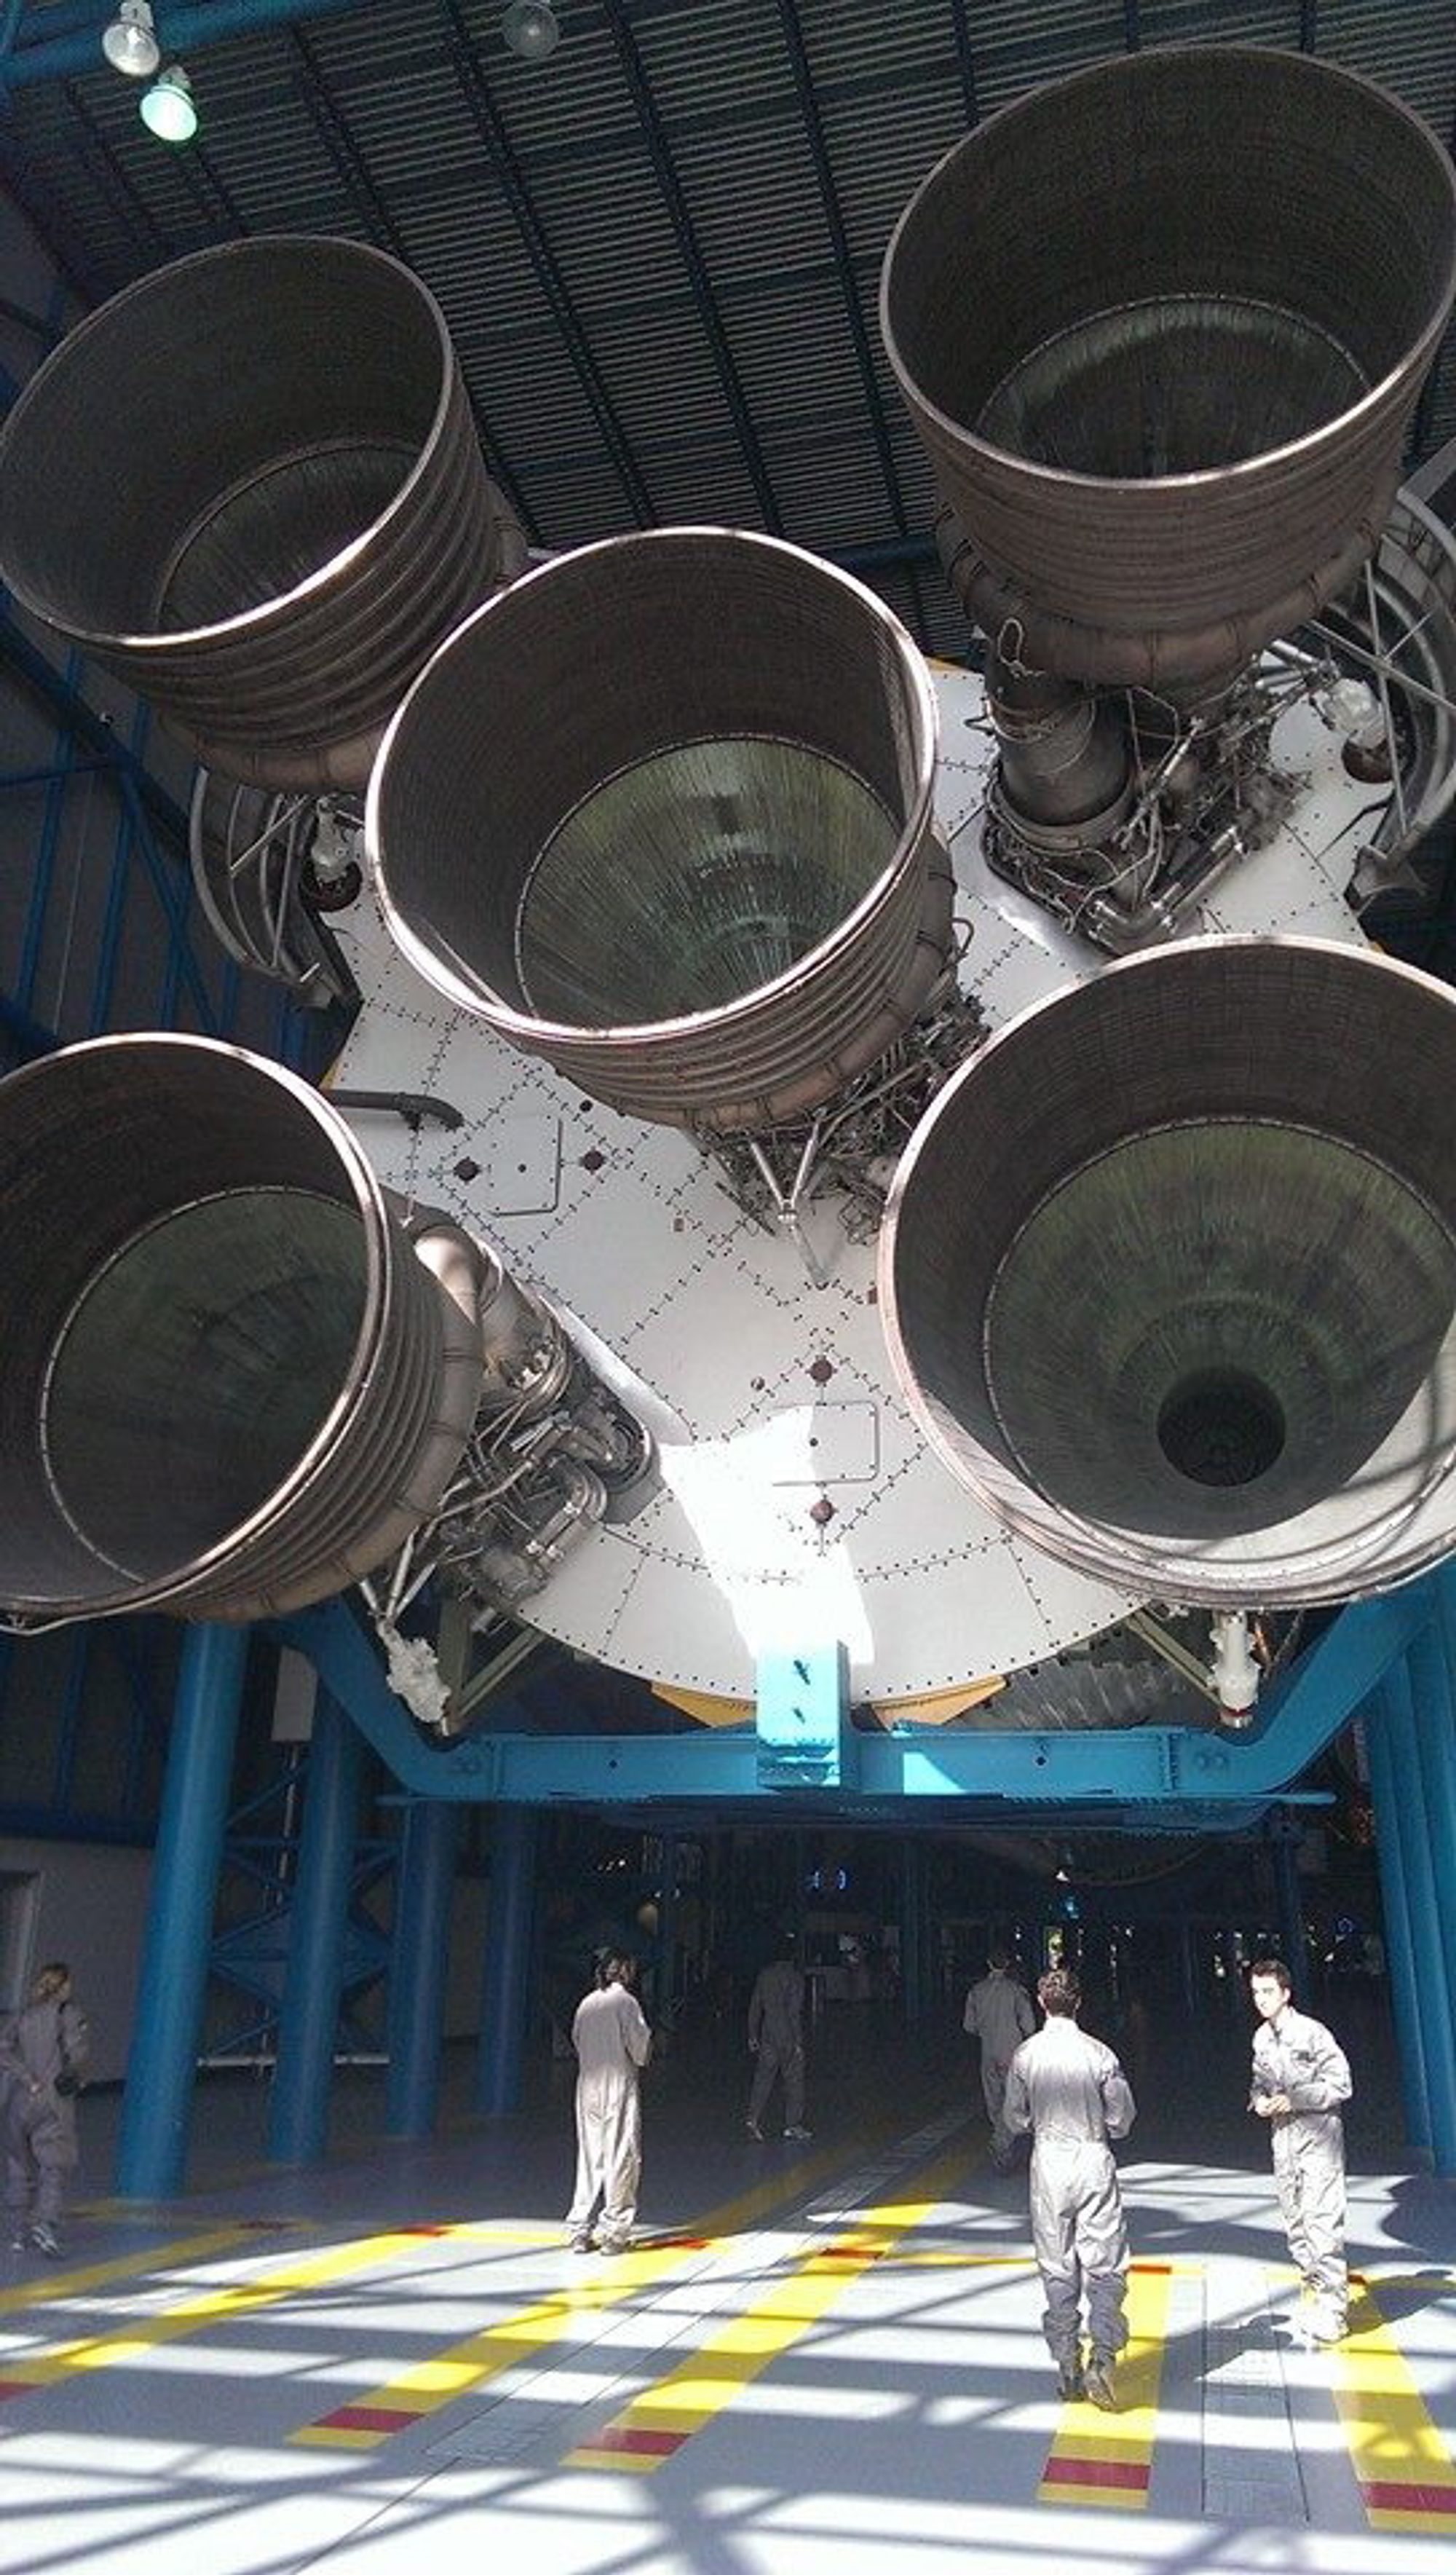 Saturn-5 inne på visitors center, KSC. Enorm rakett. 